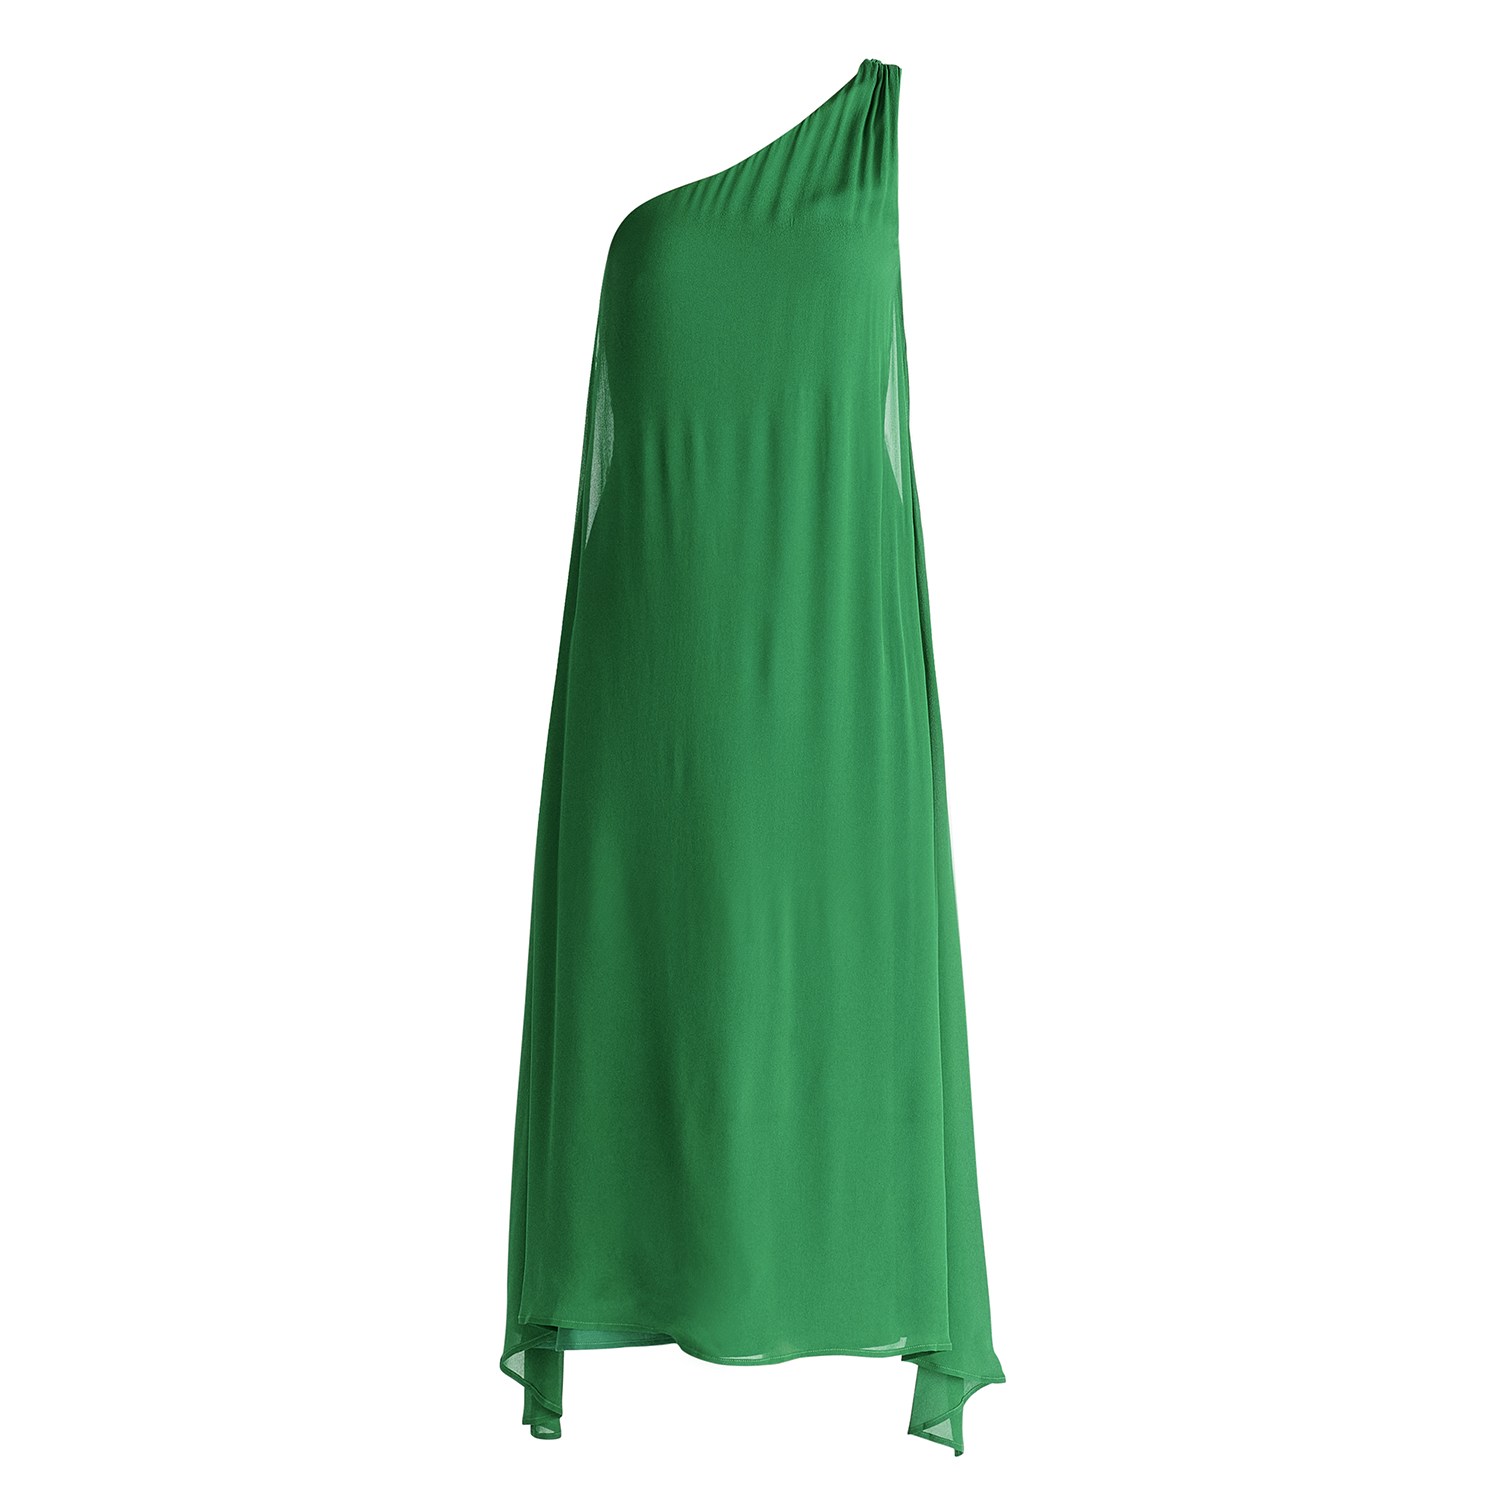 Paisie Women's One Shoulder Flowy Dress In Green